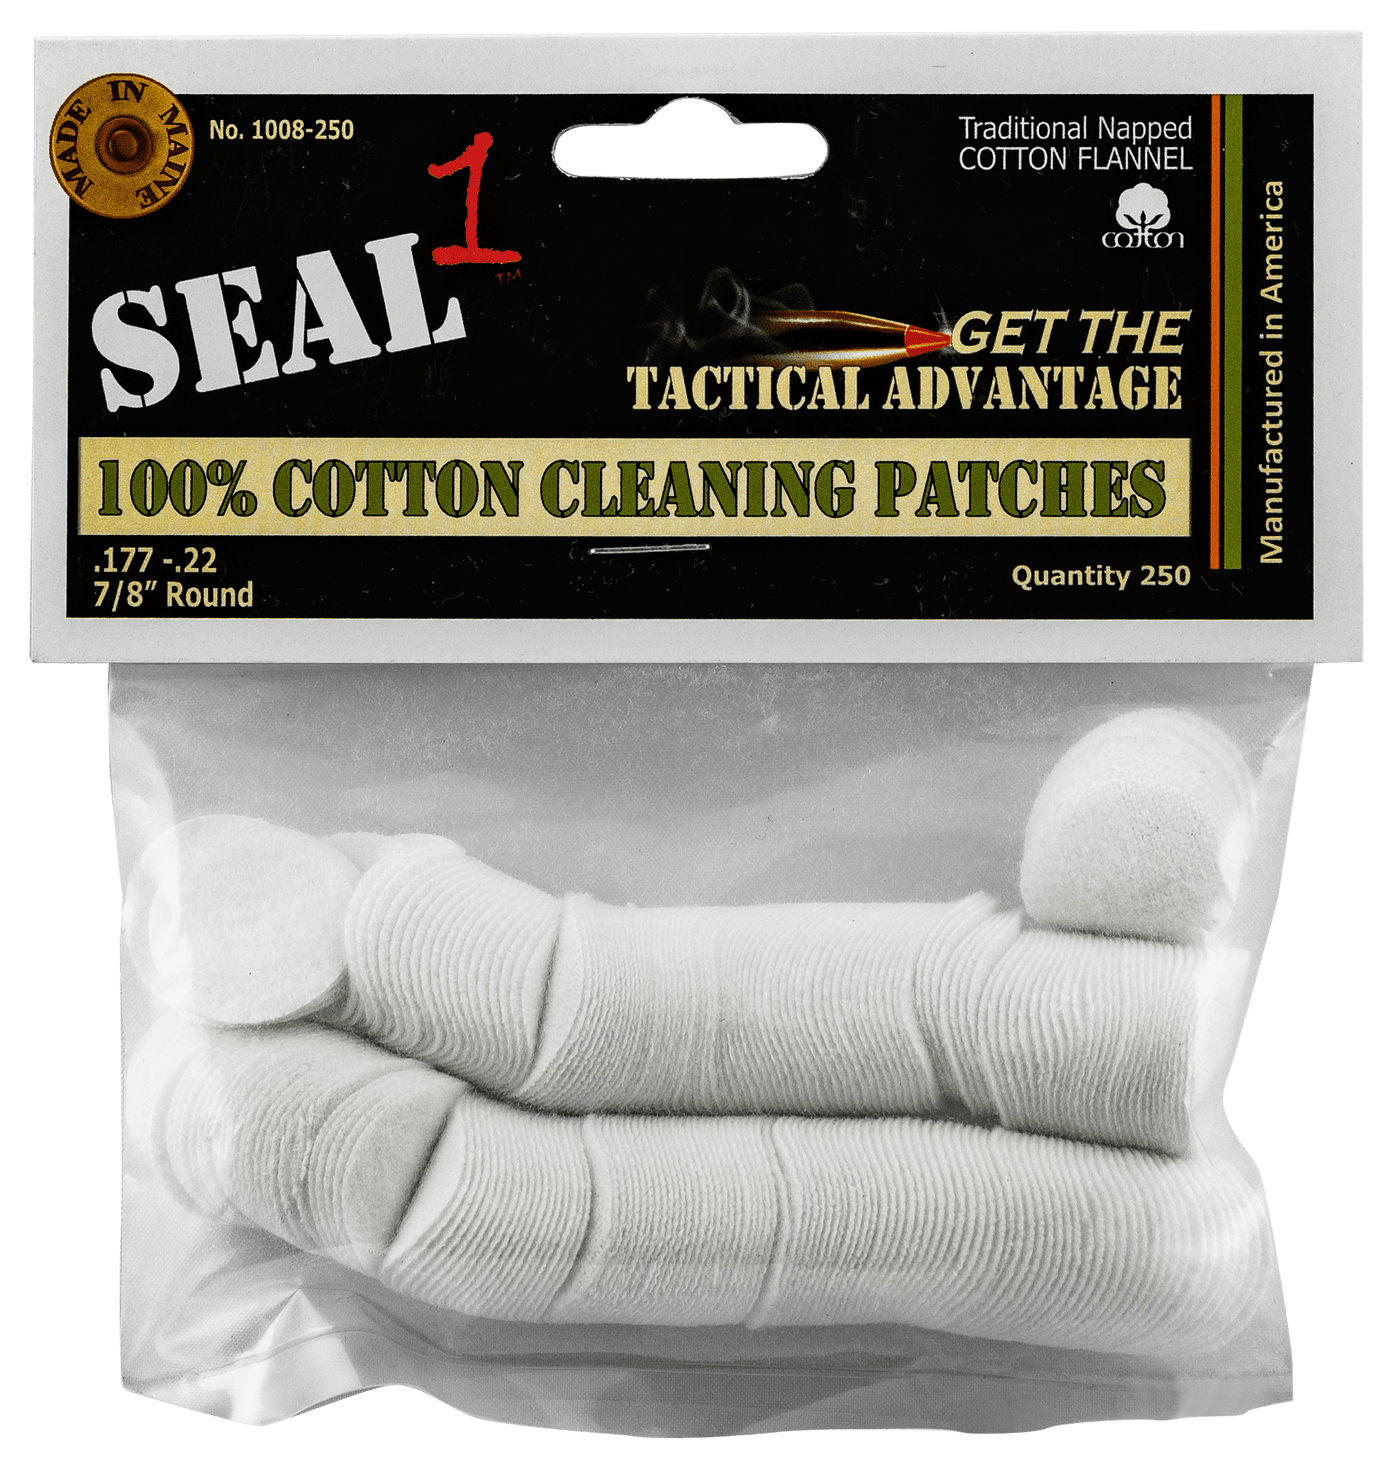 Seal 1 Seal 1 Cleaning Patches, Seal1 1008-250 .177-.22 Cleaning Patch       250ct Gun Care